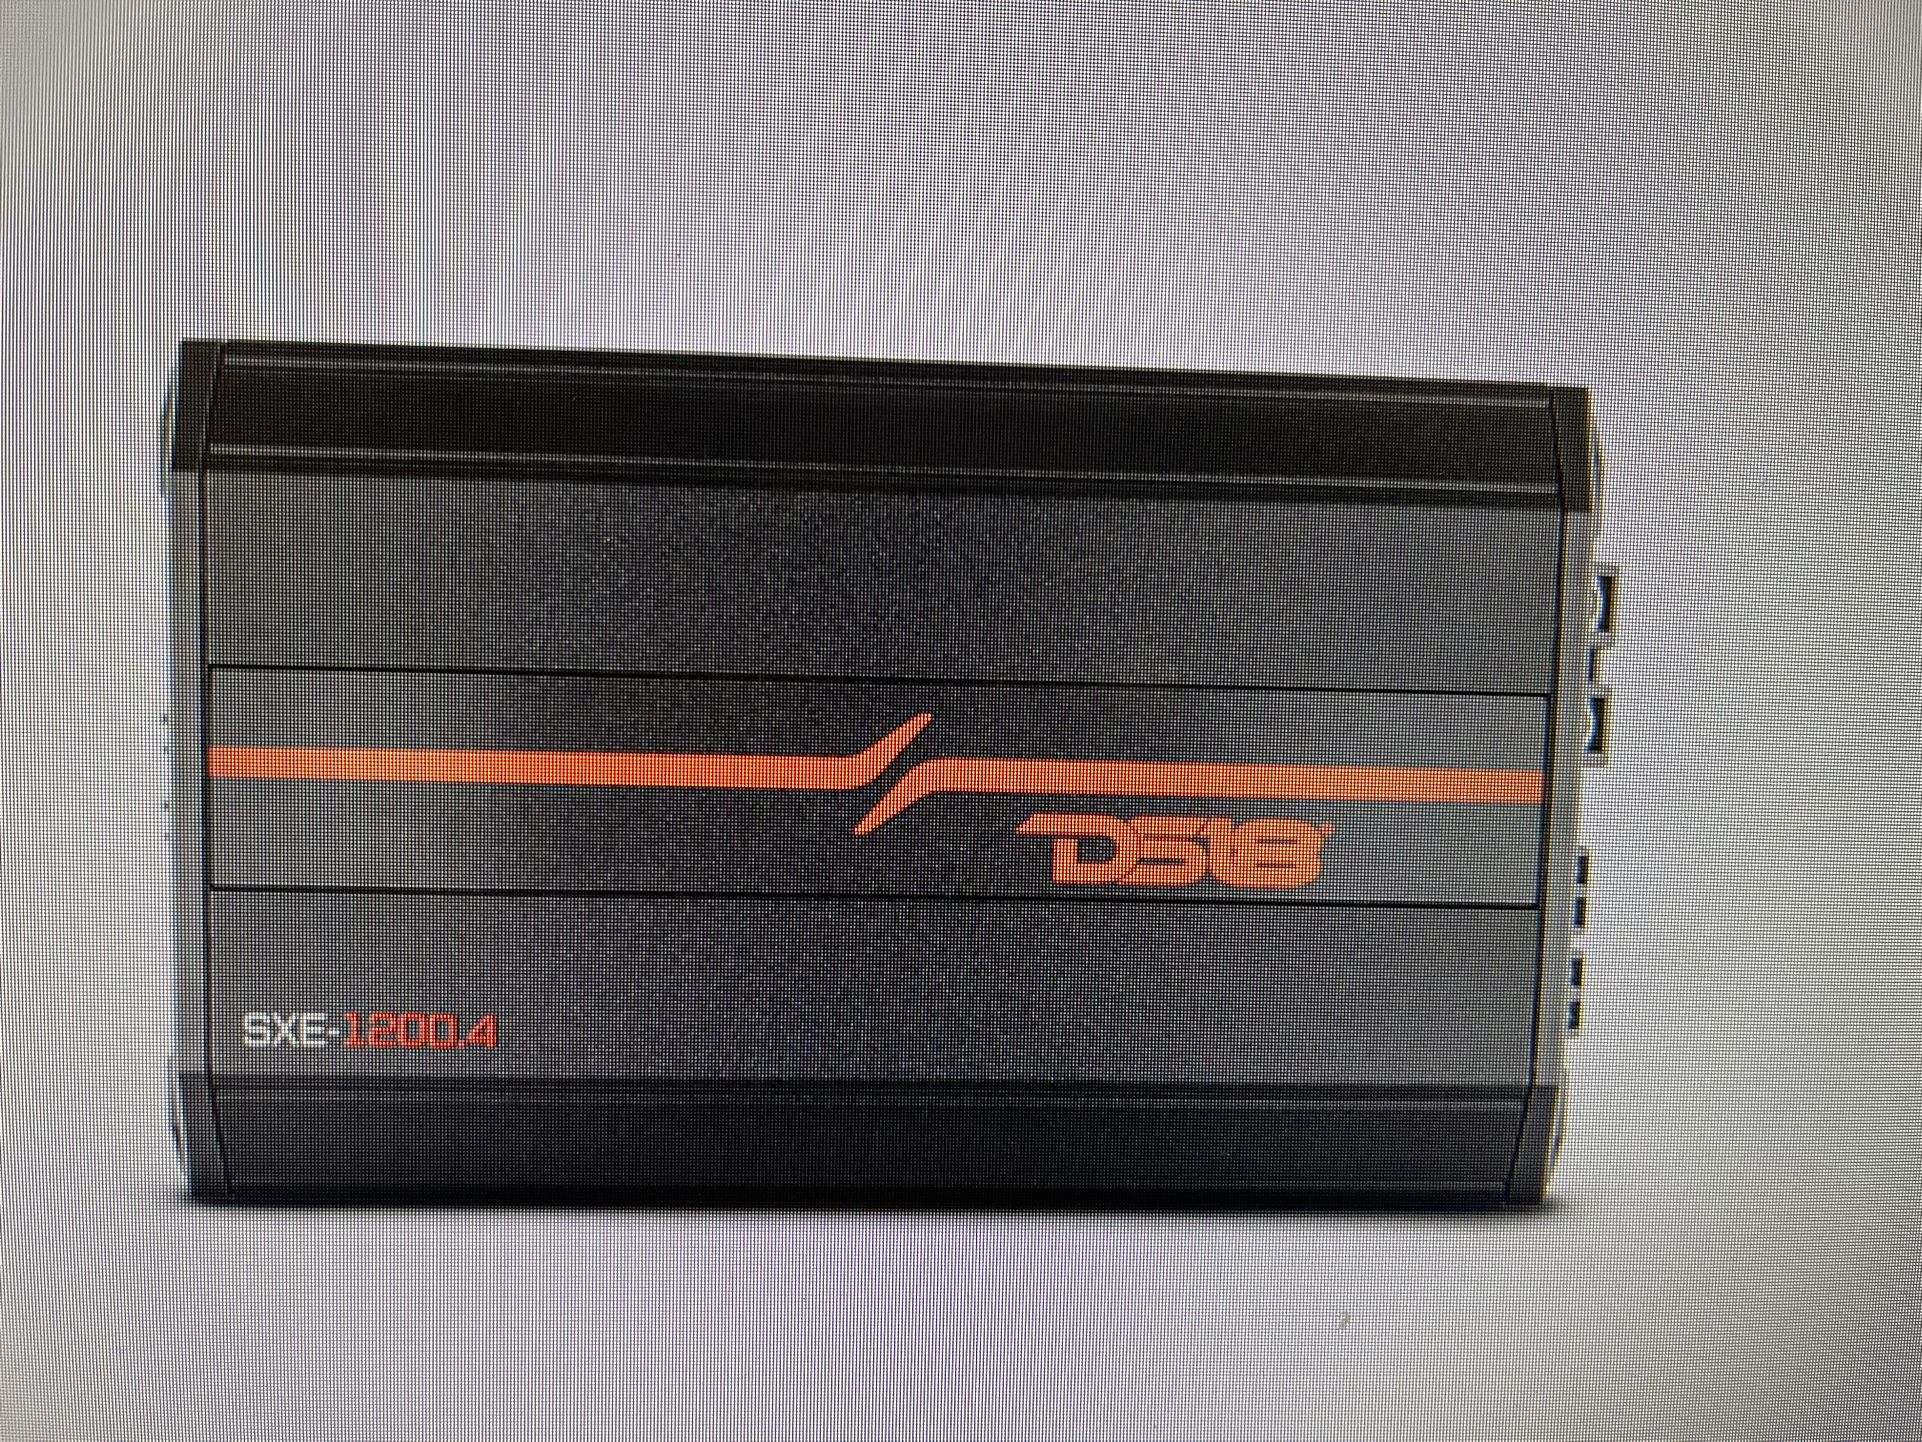 DS18 SXE-1200.4 BRAND NEW 1200 WATT 4-CHANNEL AMP 